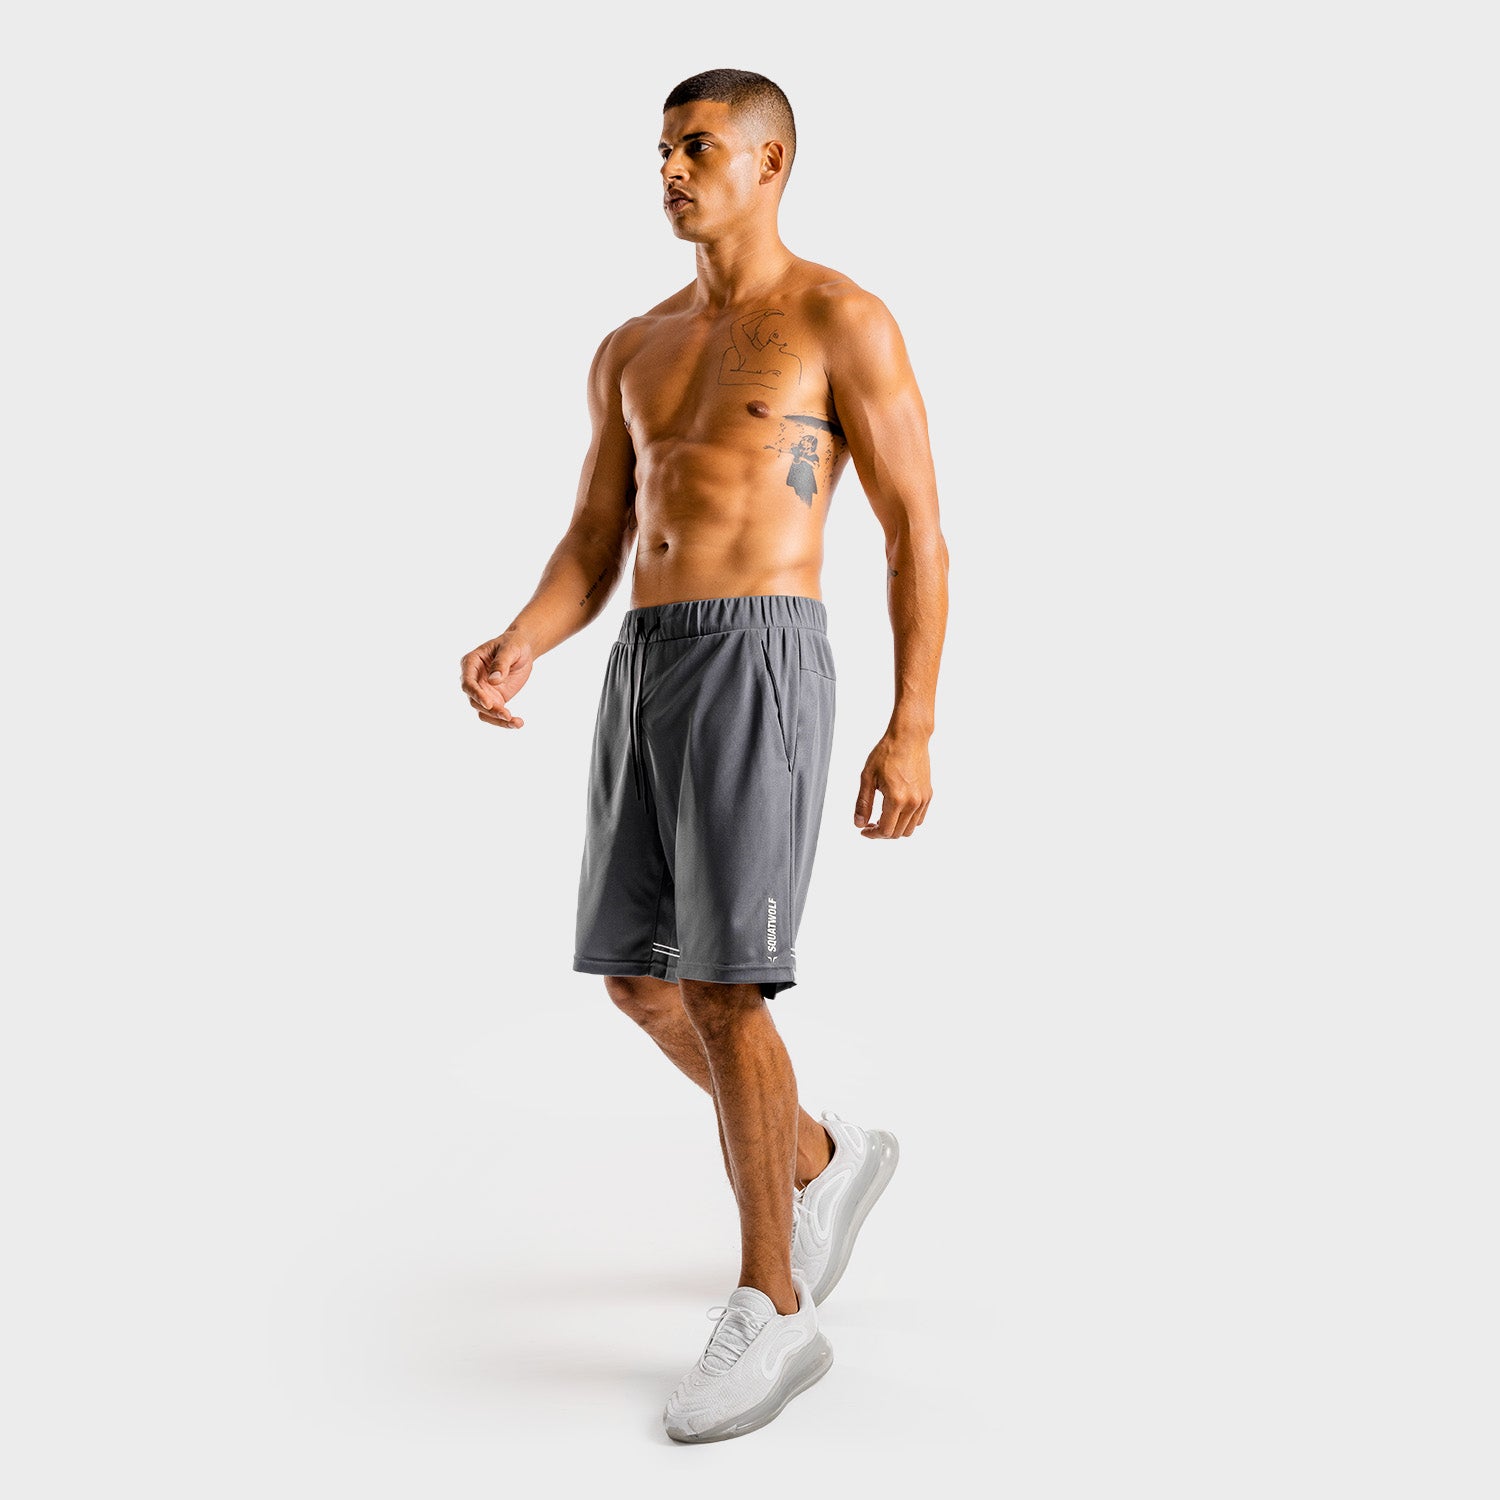 squatwolf-workout-short-for-men-flux-basketball-shorts-charcoal-gym-wear